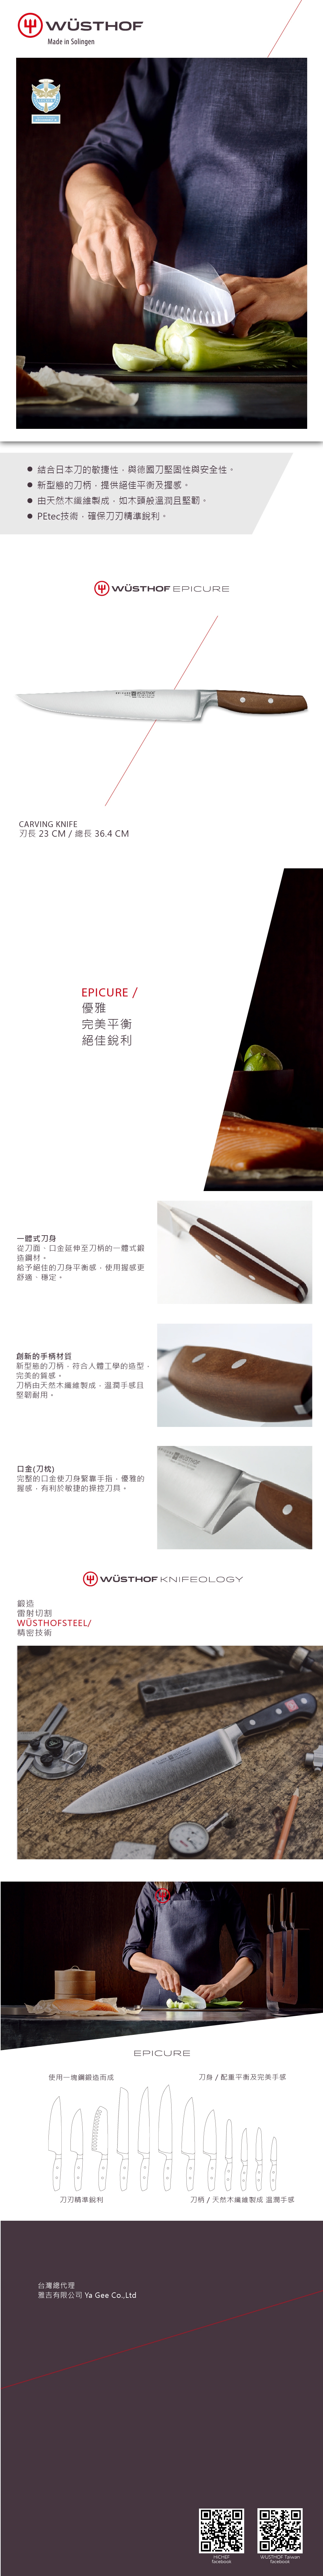 WUSTHOF 德國三叉牌 EPICURE 23cm 切片刀 carving knife